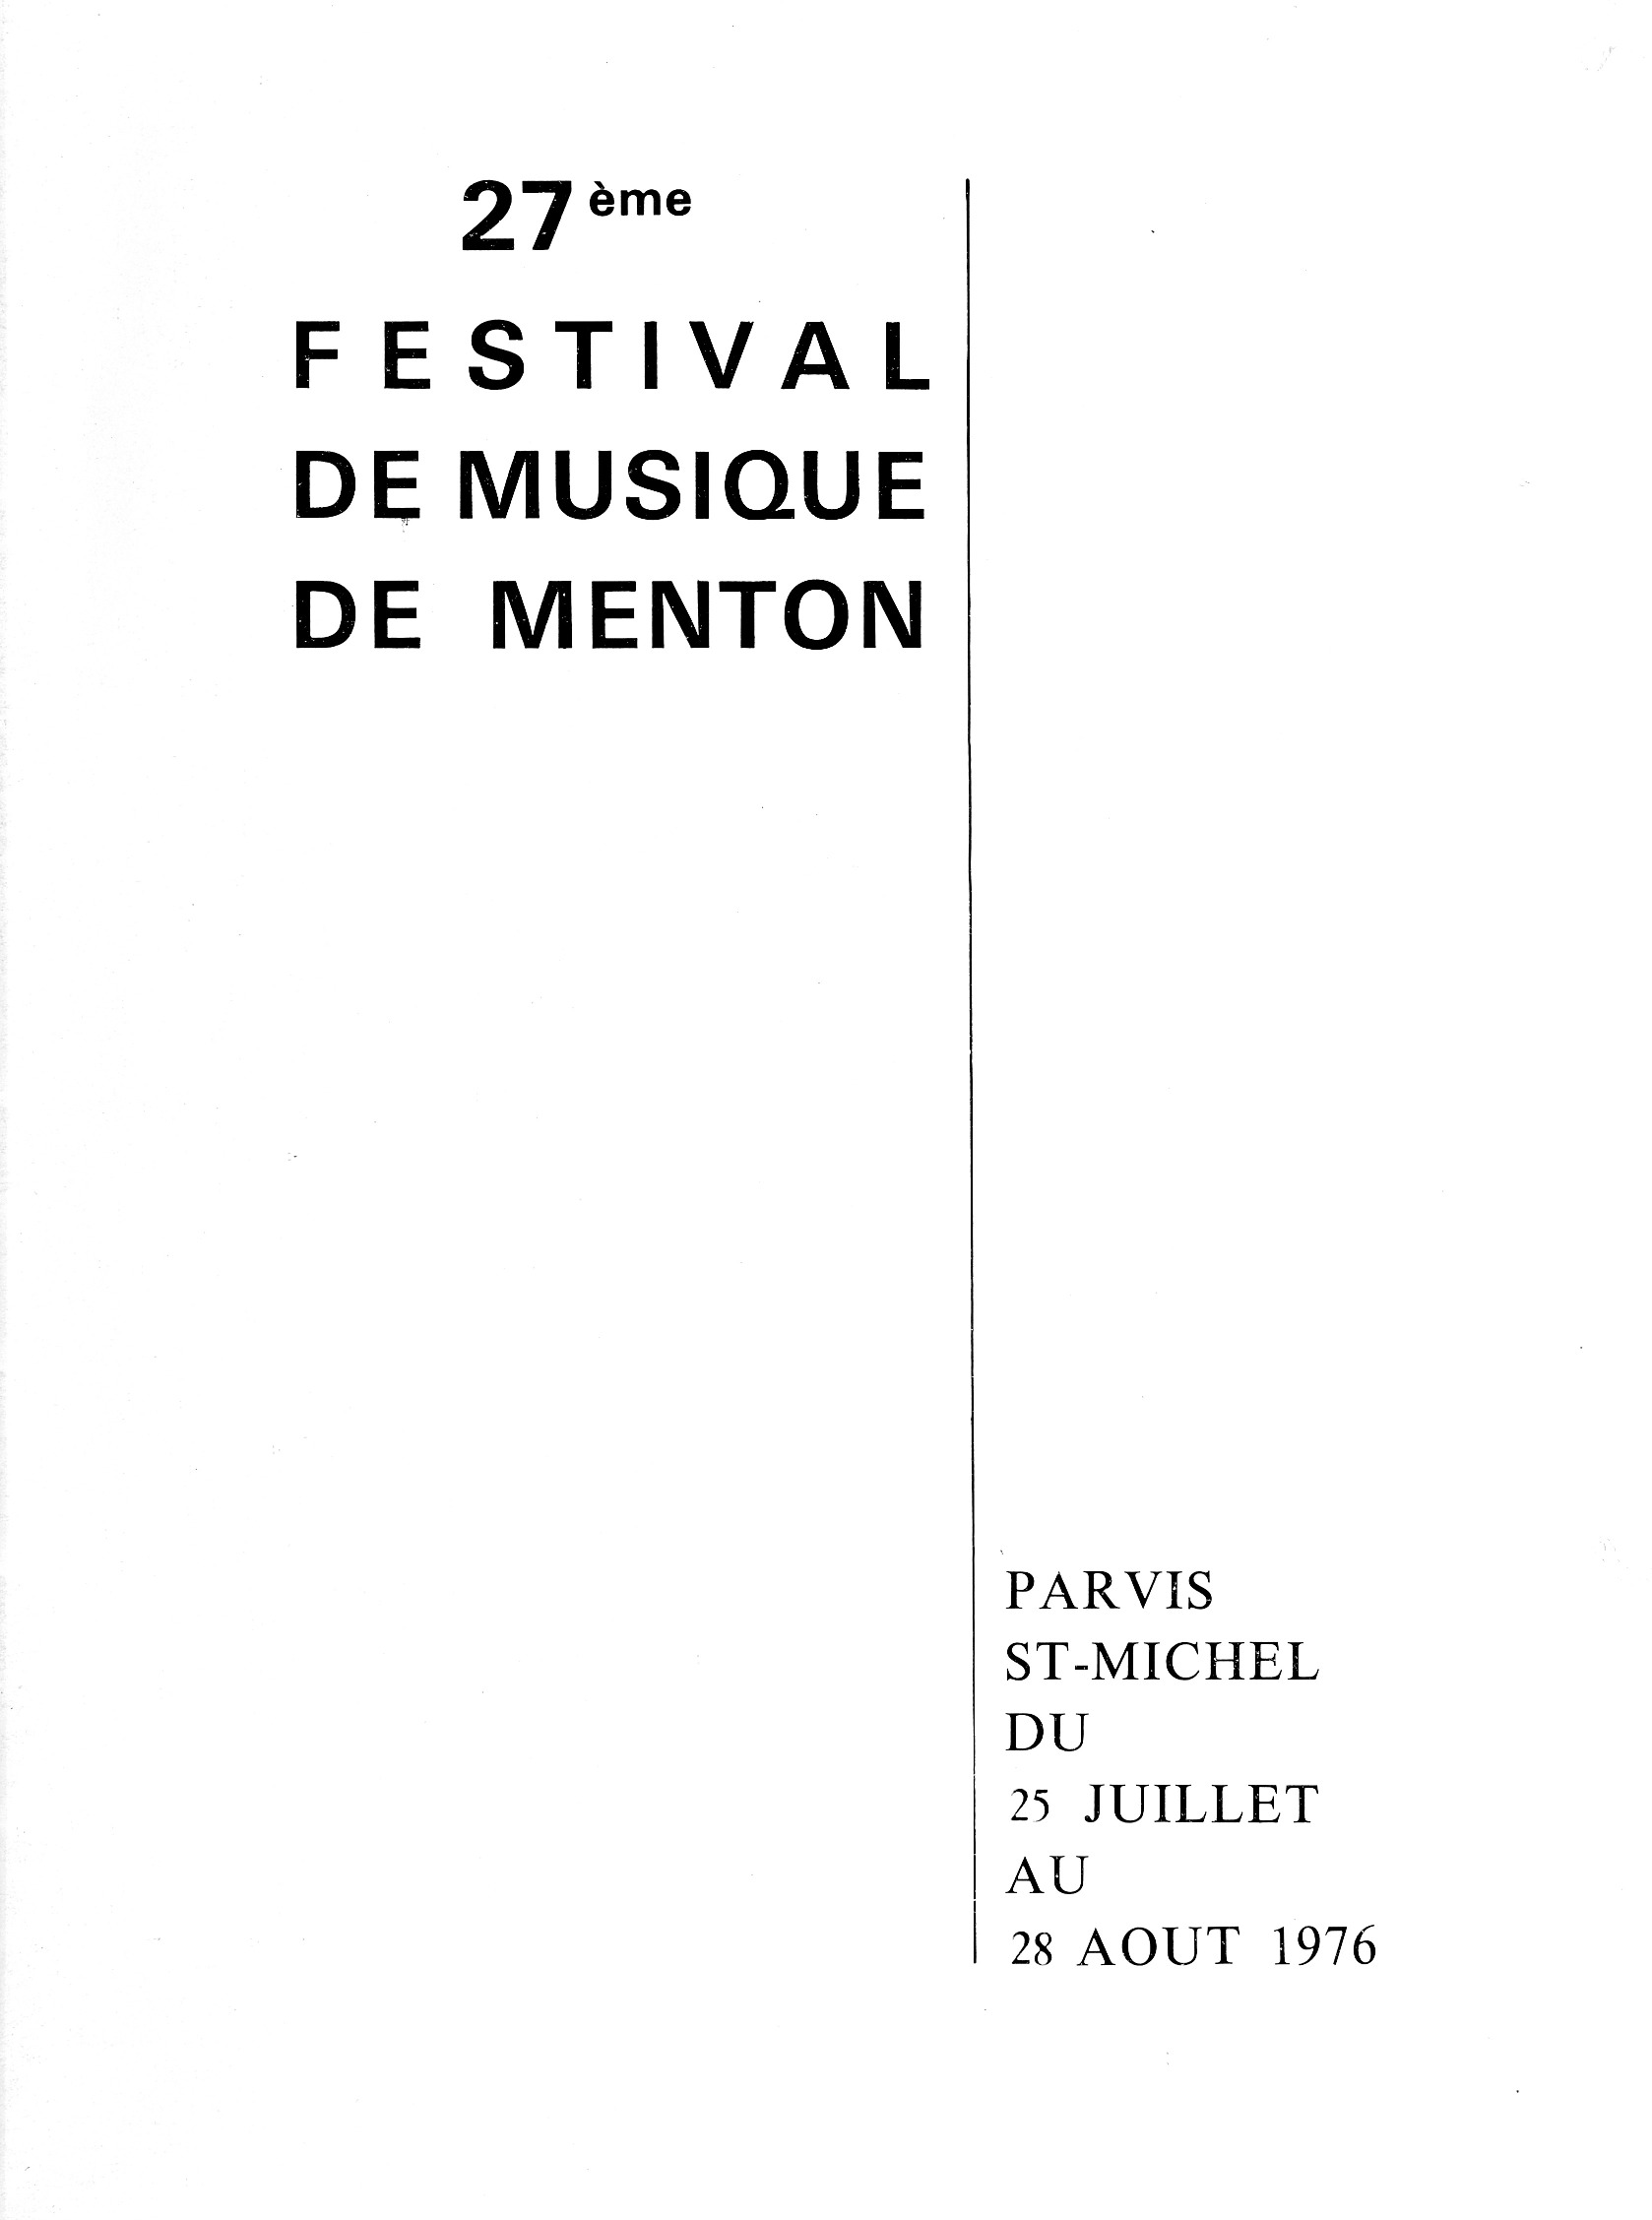 Festival de musique de Menton 1976